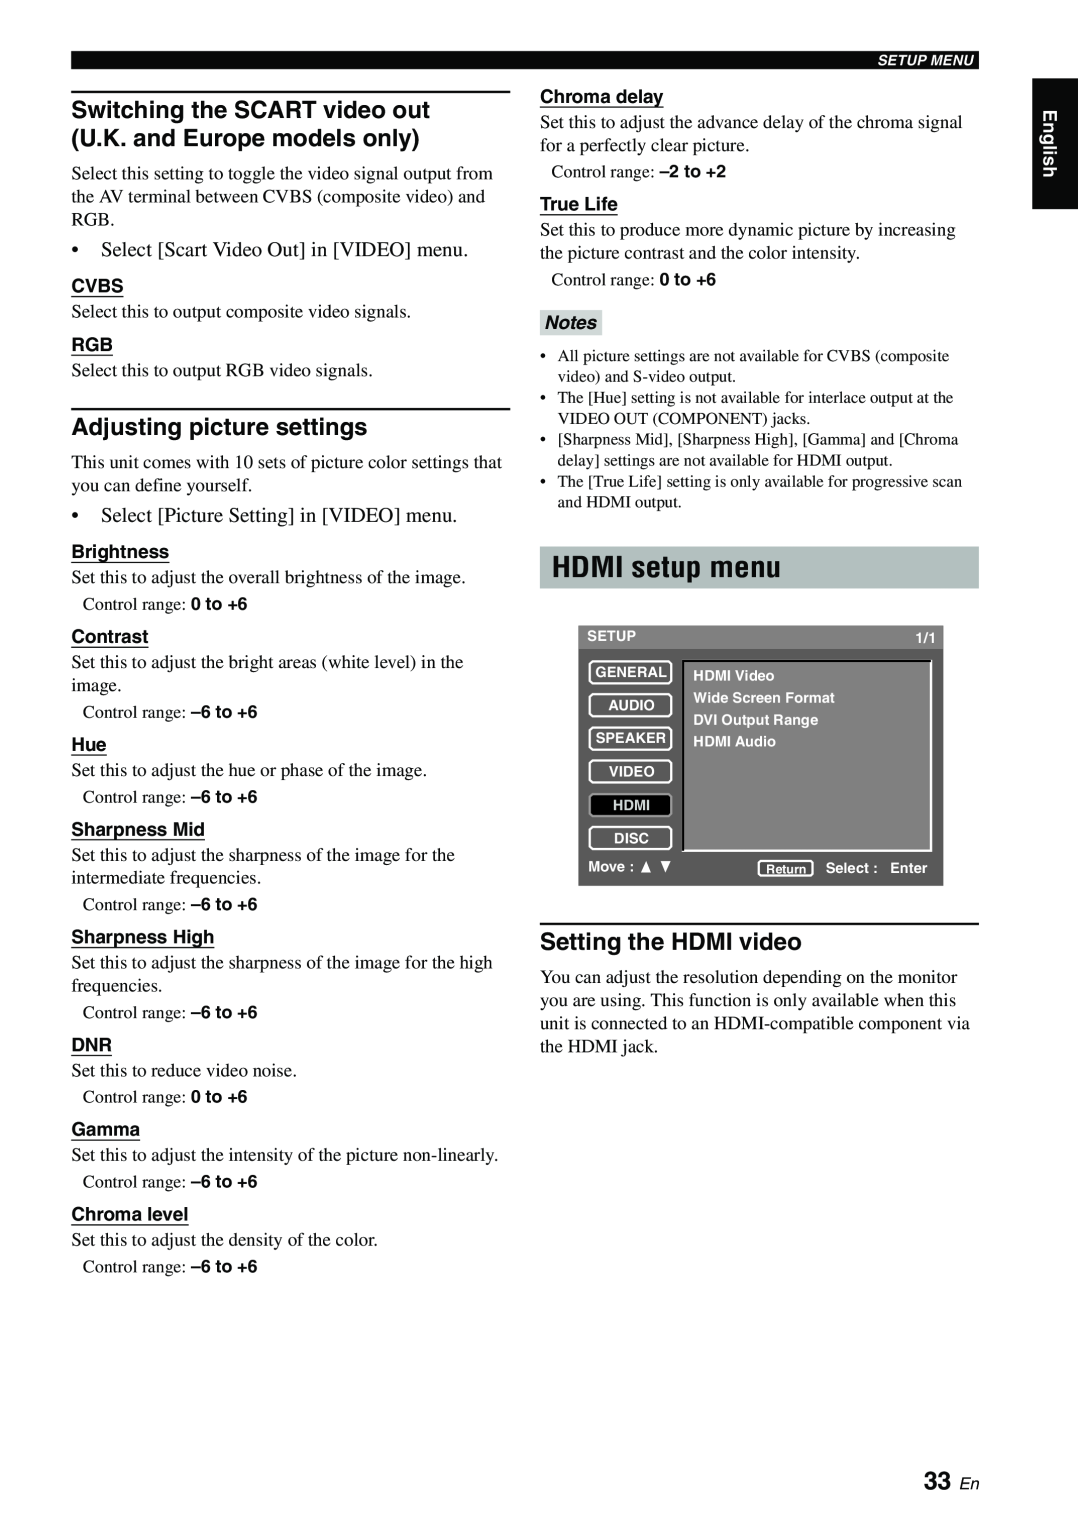 Yamaha DVD-S1700B manual HDMI setup menu, 33 En, Adjusting picture settings, Setting the HDMI video, English 